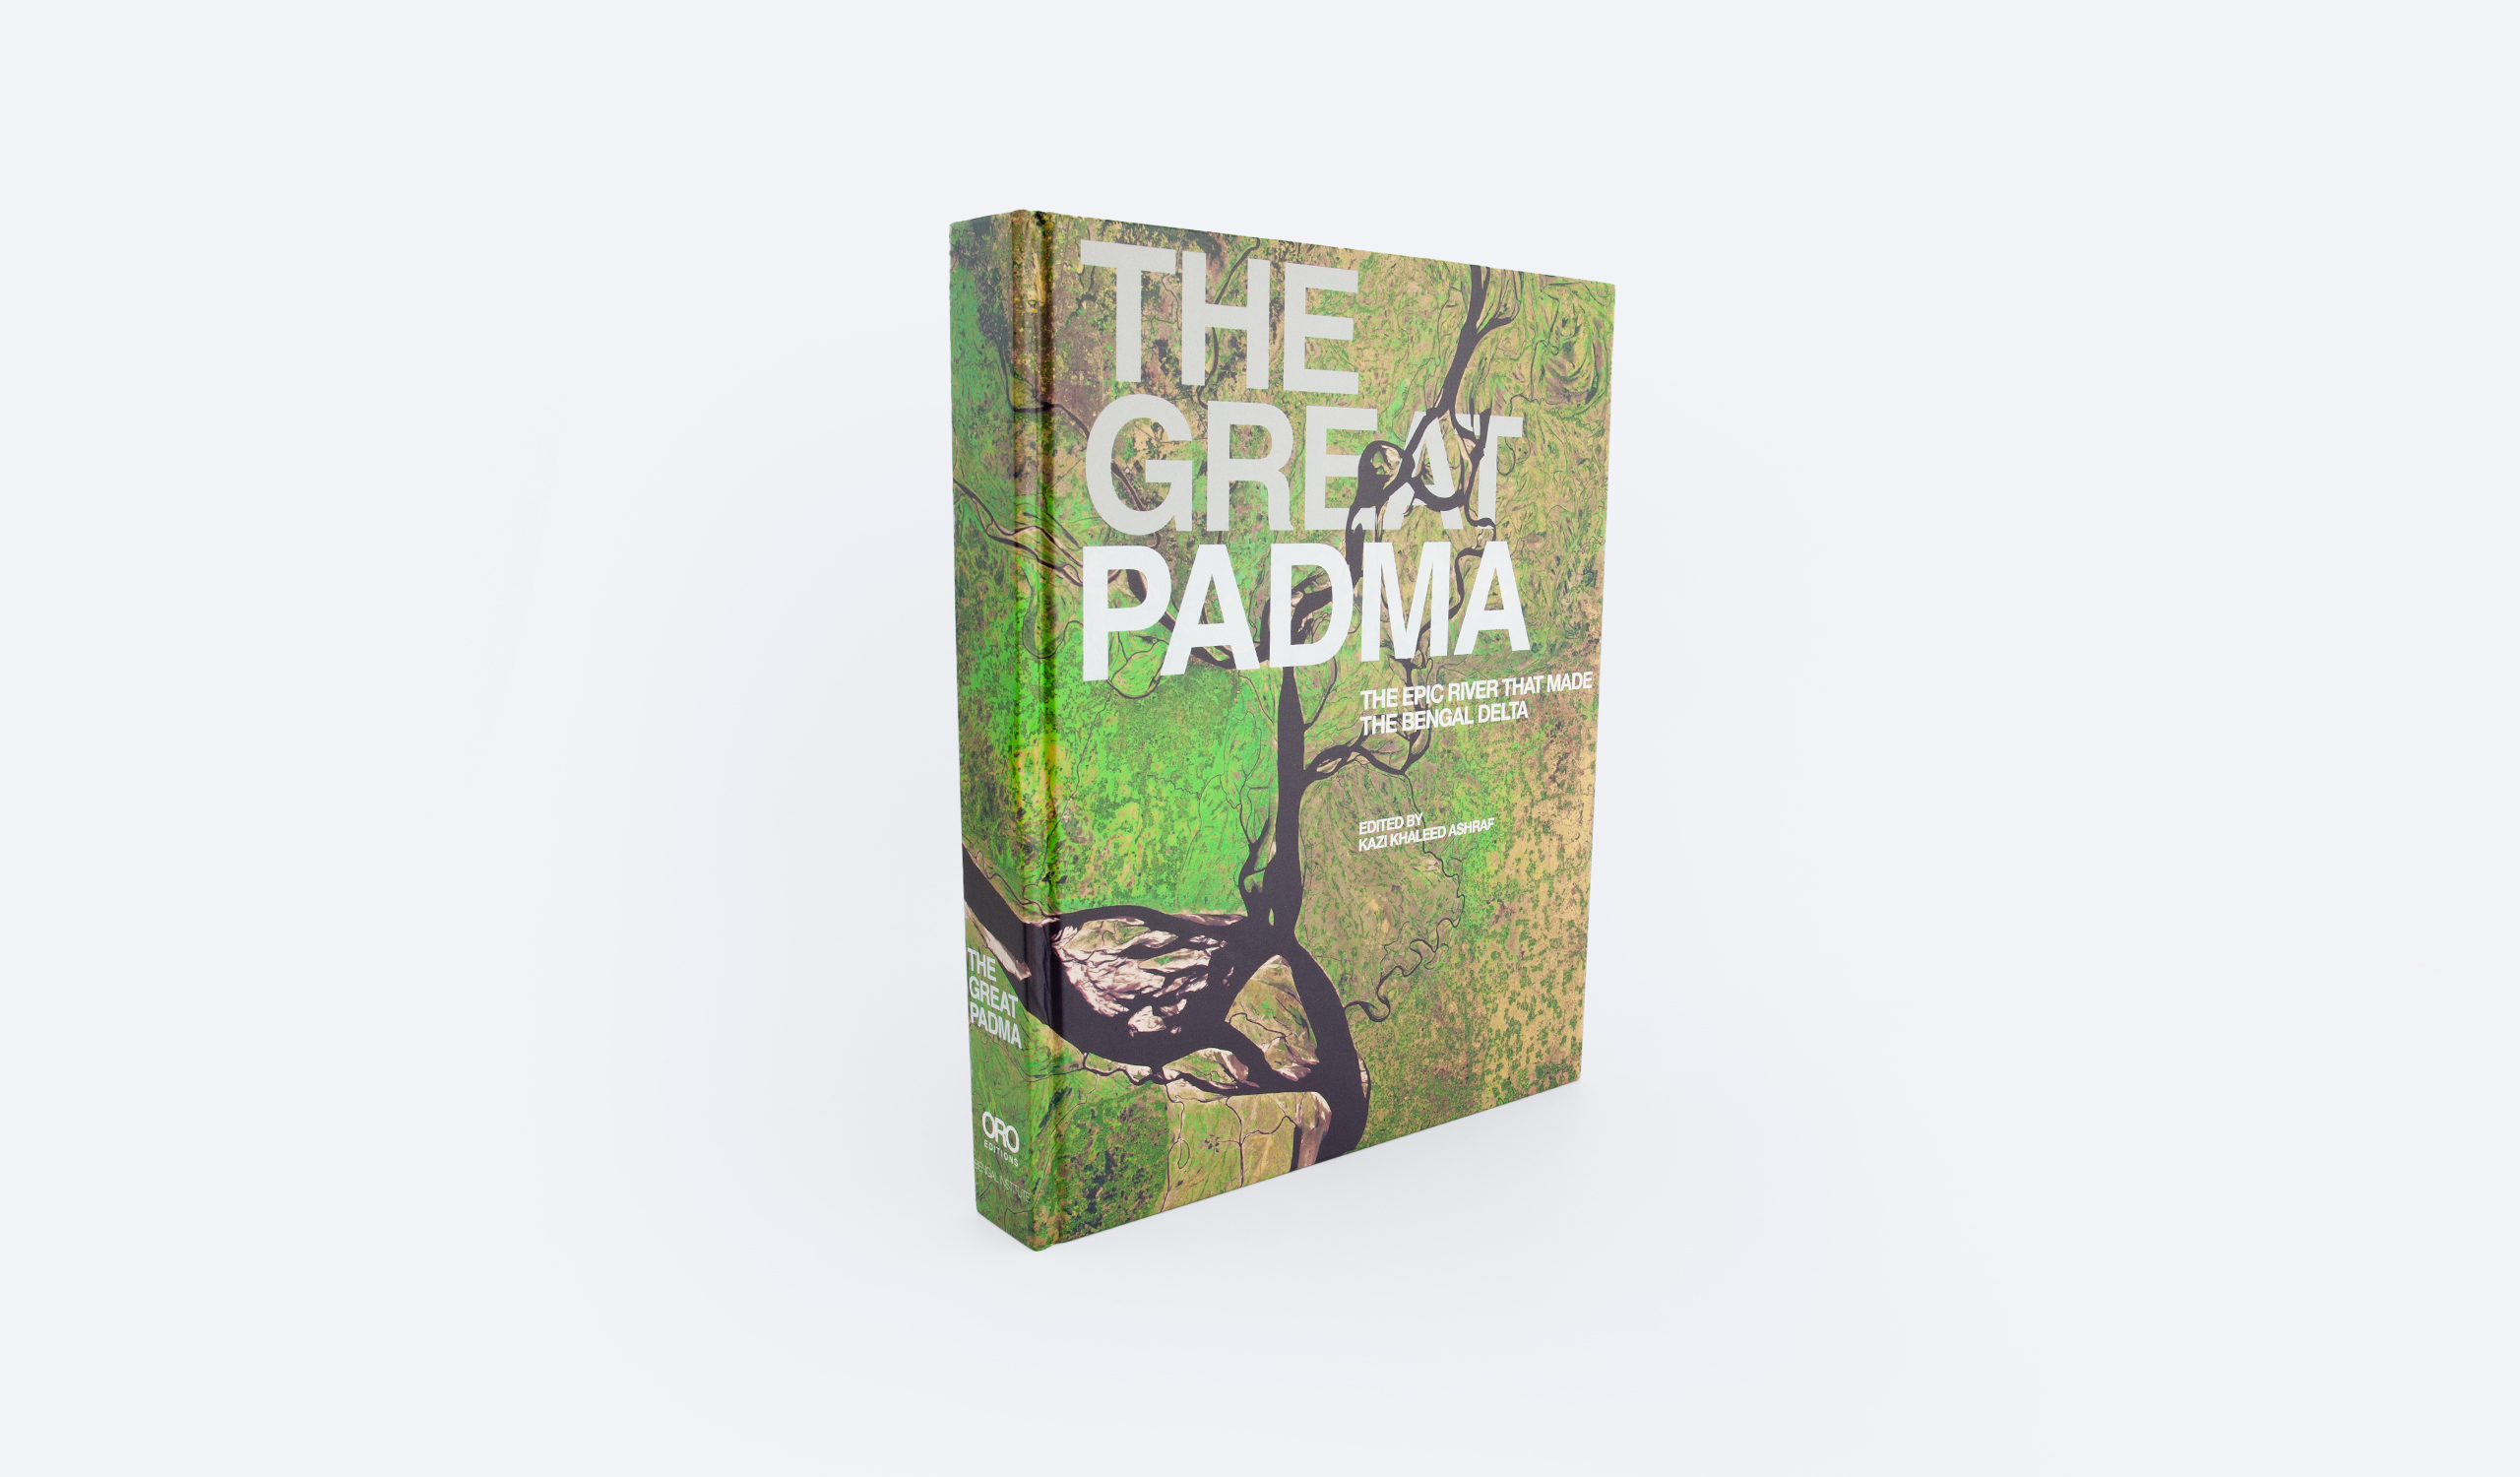 The Great Padma